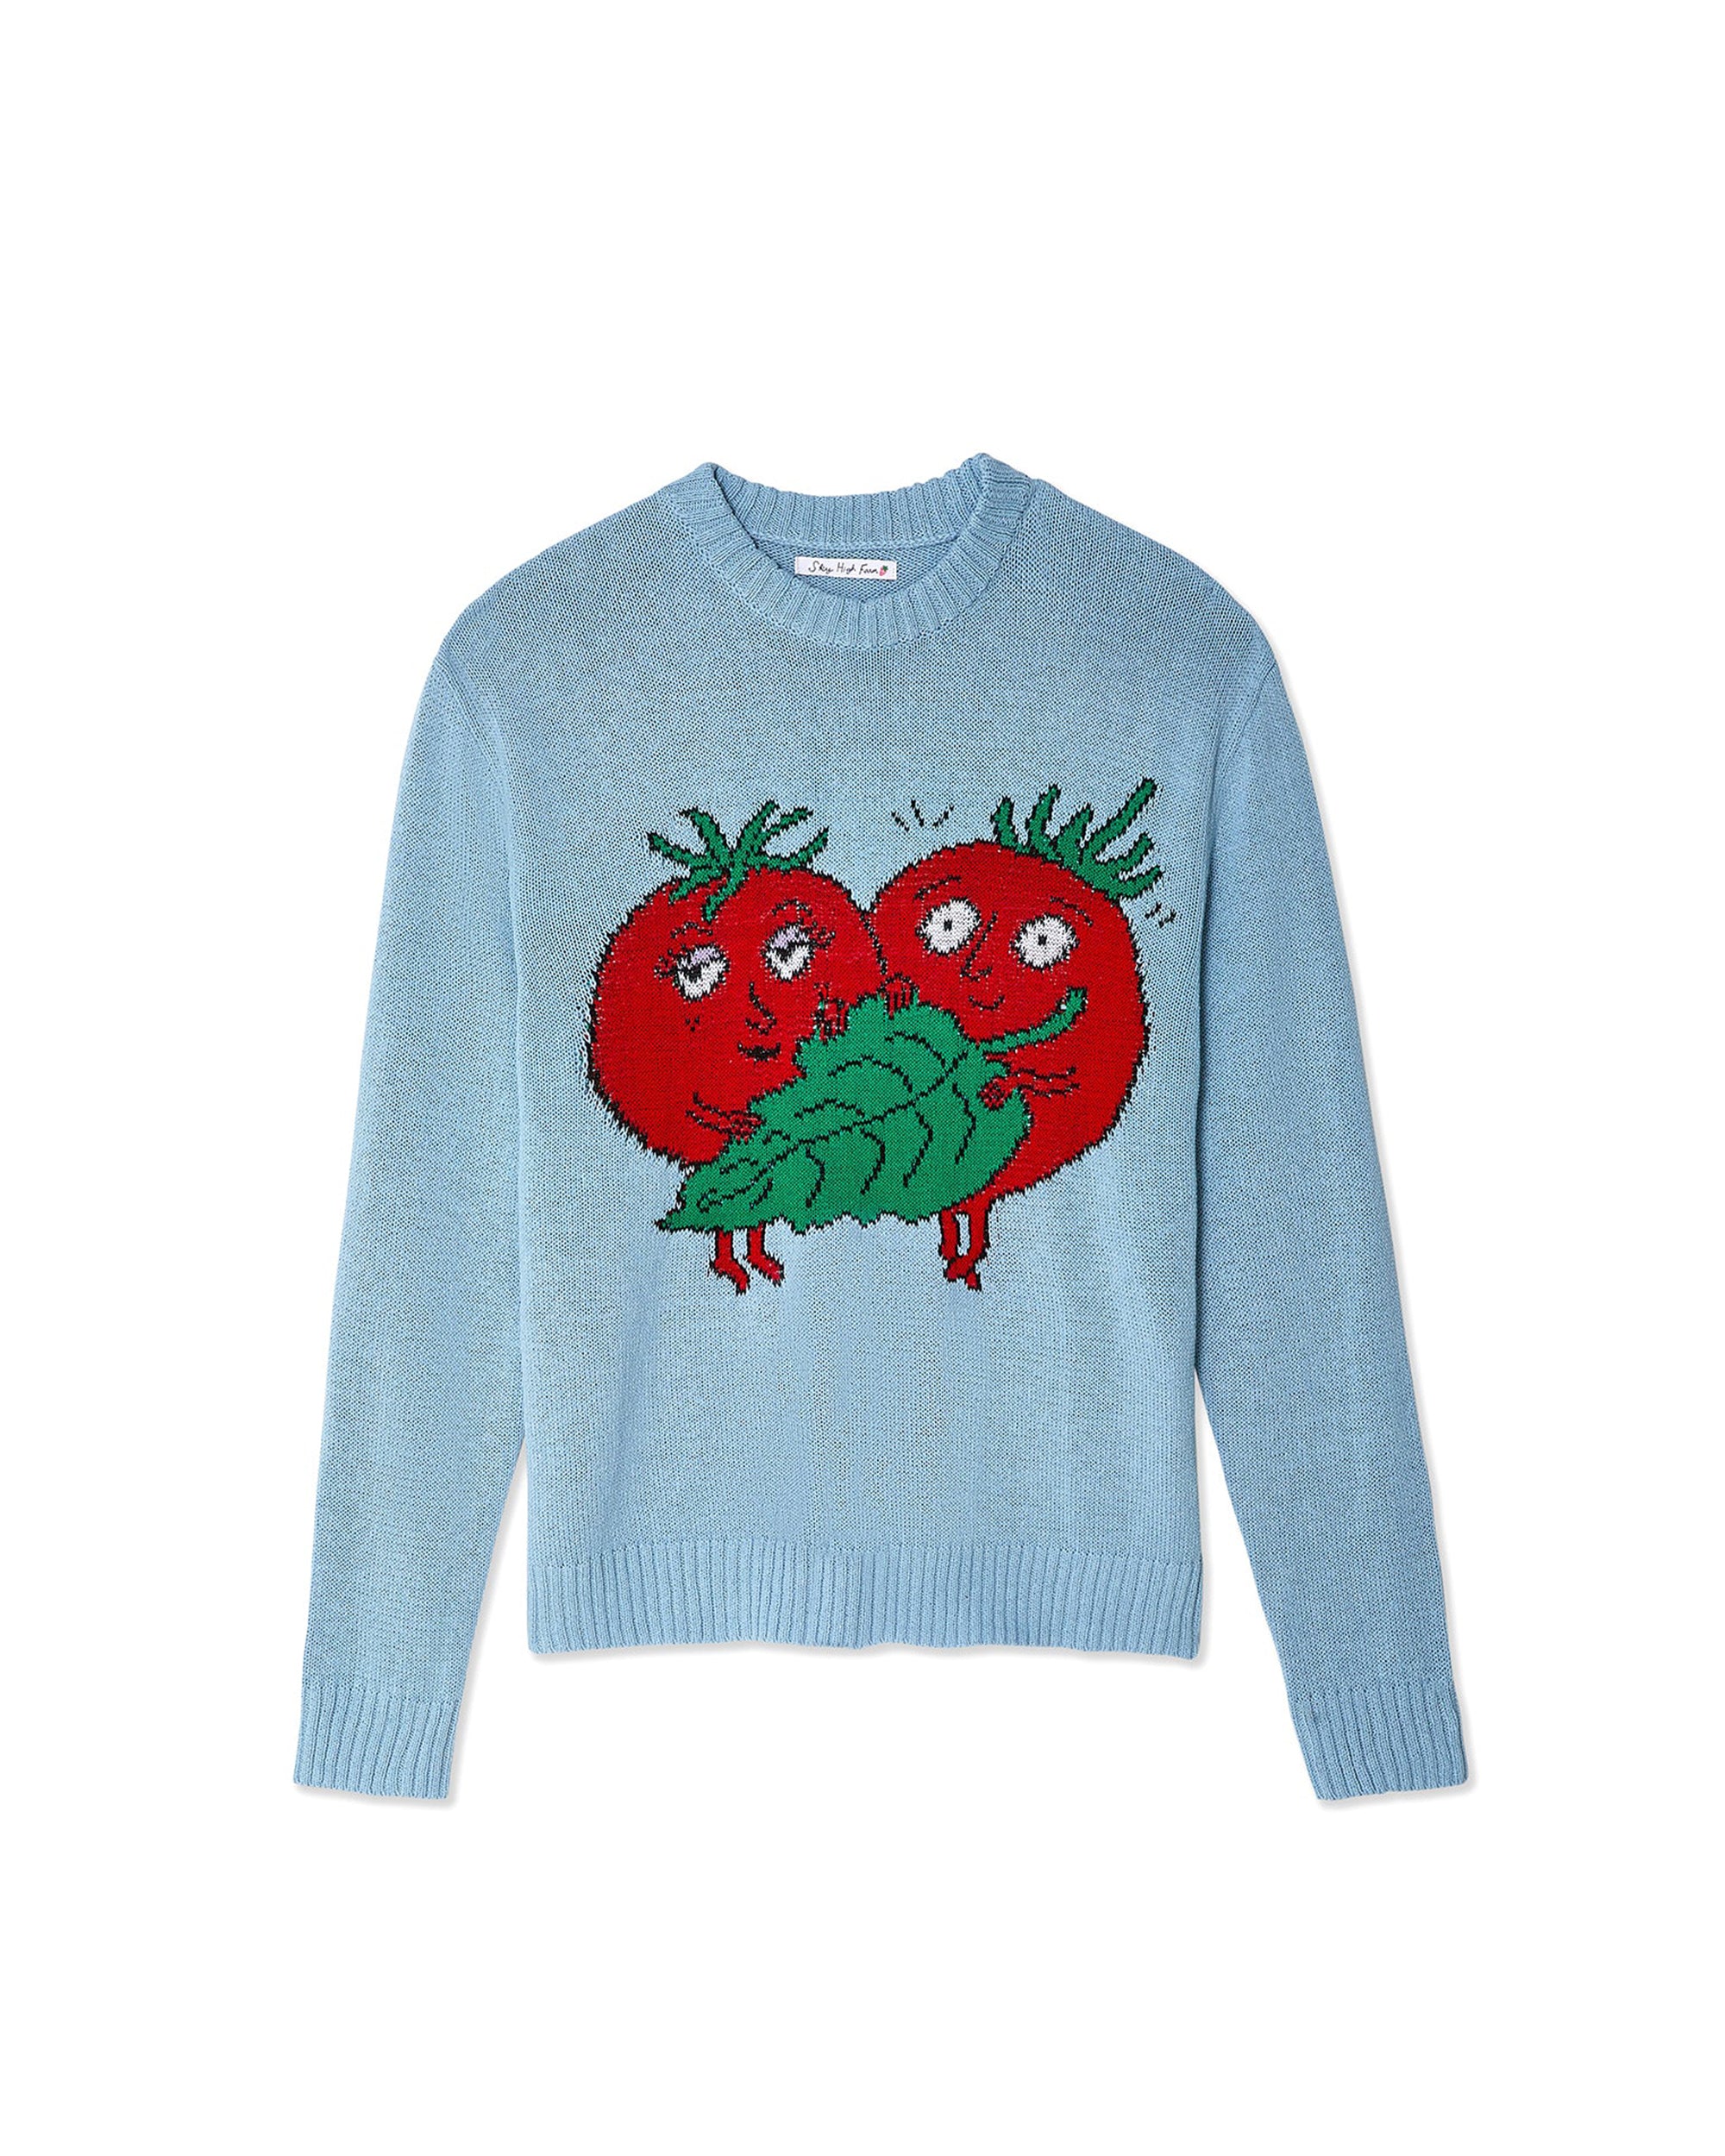 Intarsia Tomatoes Sweater - Light Blue